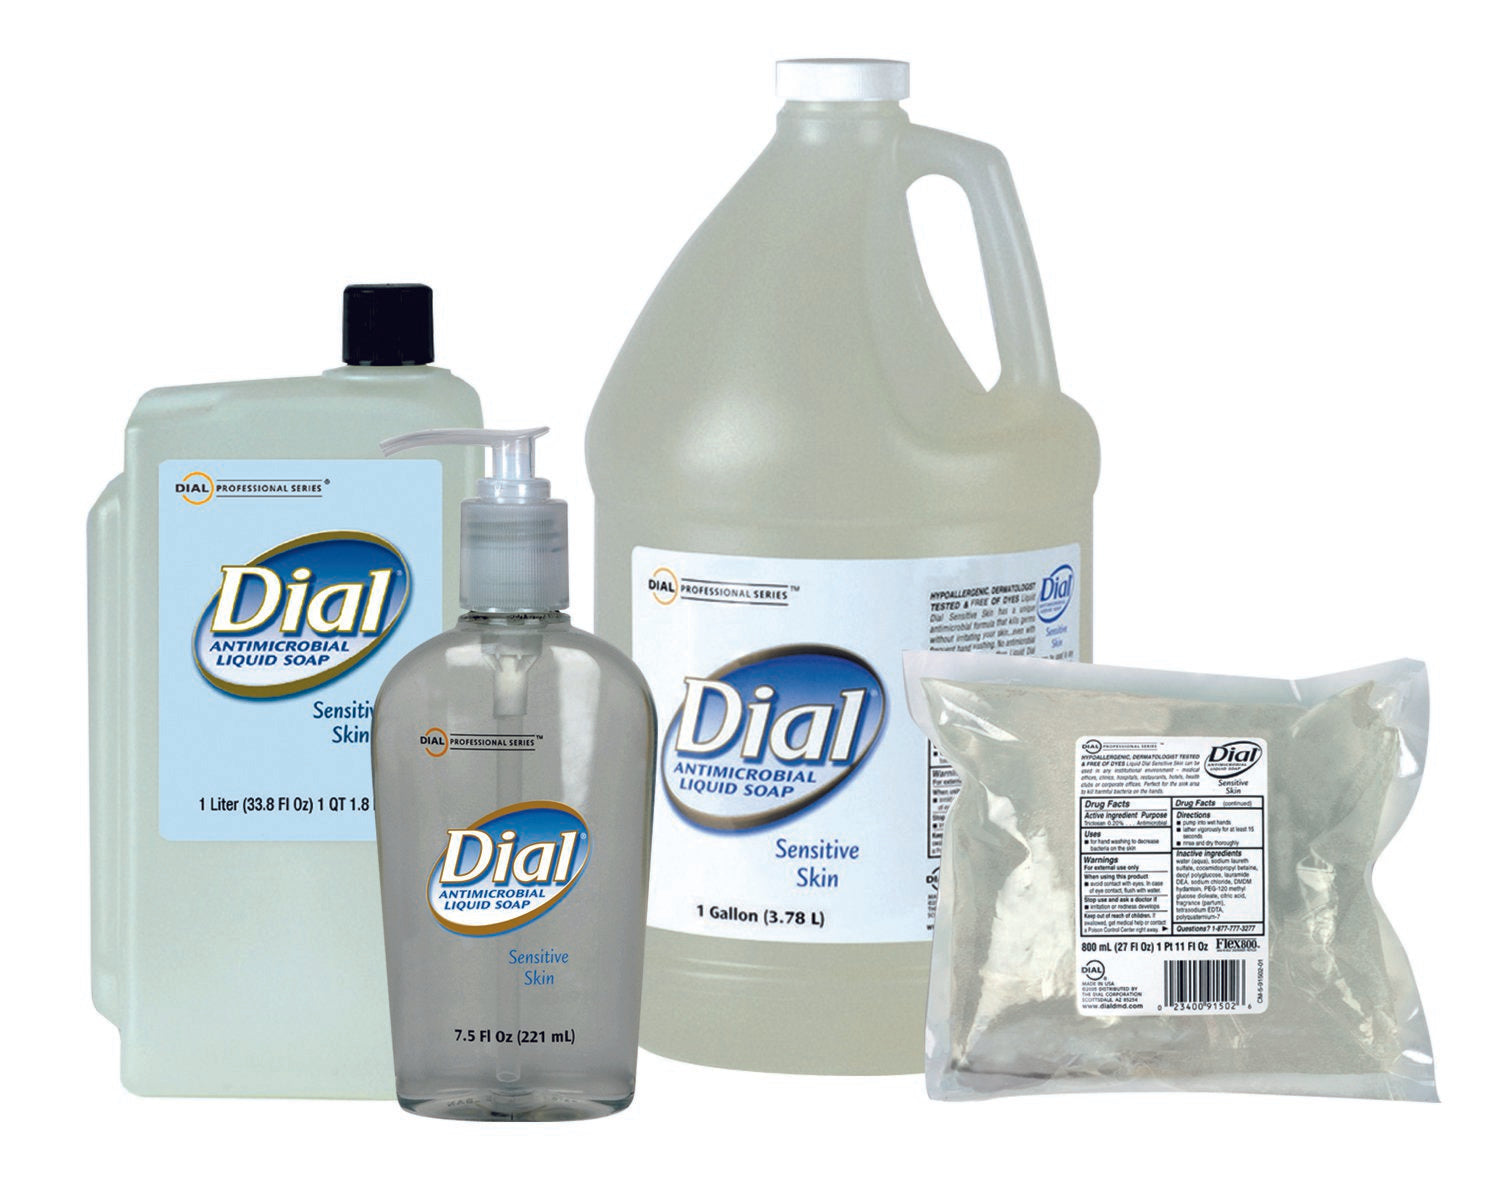 Antimicrobial Soap Dial® Professional for Sensitive Skin Liquid 7.5 oz. Pump Bottle Floral Scent